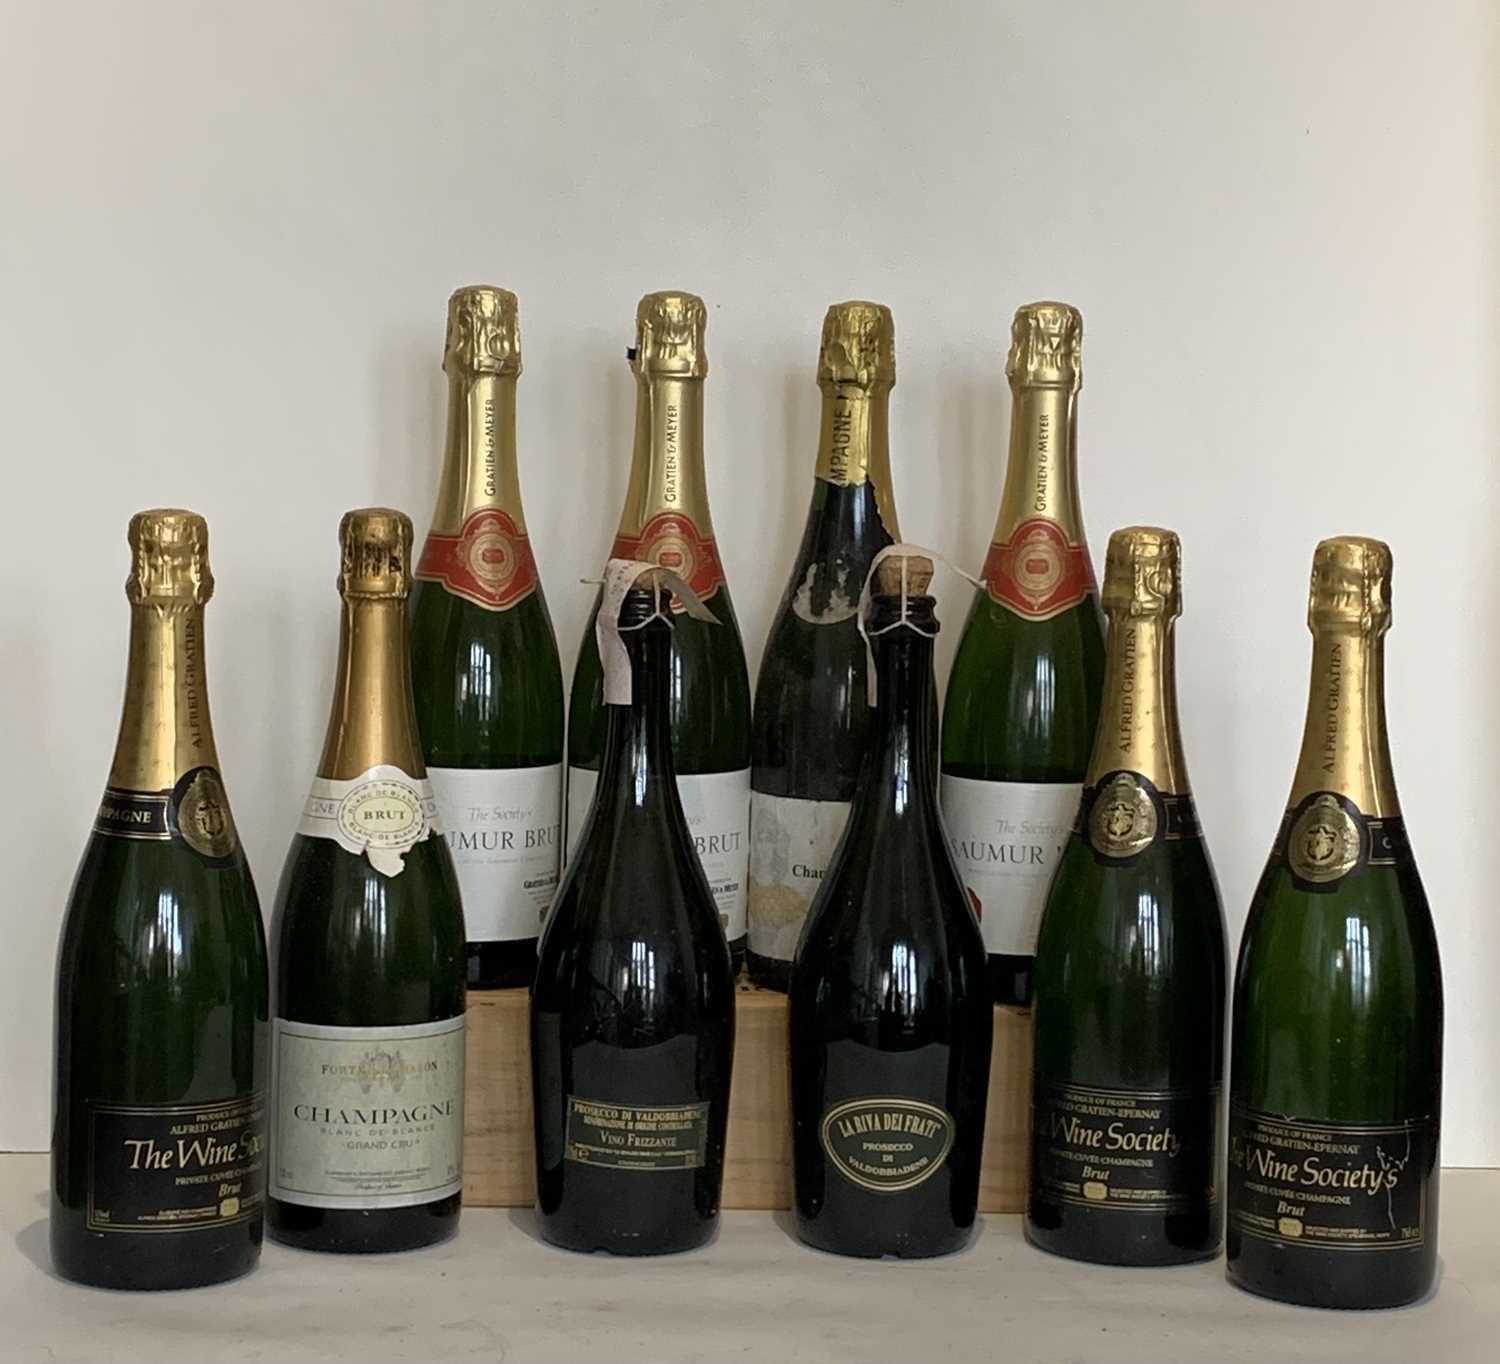 10 Bottles Mixed Lot Champagne, Wine Society Saumur Brut and Prosecco di Valdobbiadene